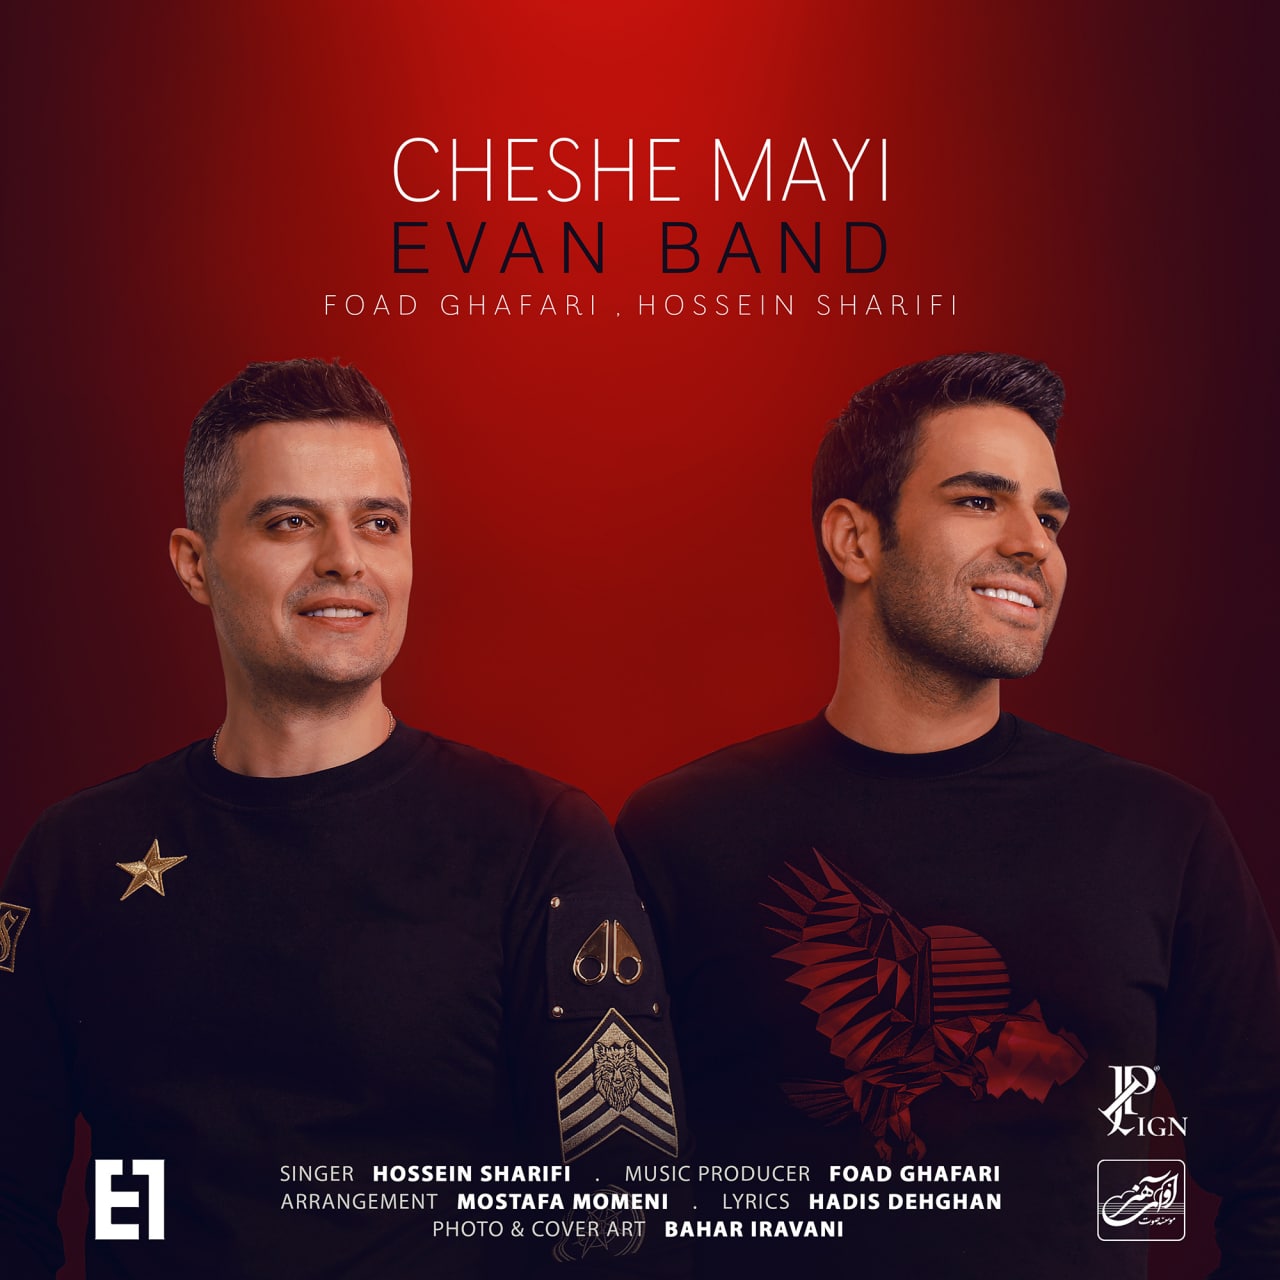 Evan Band - Cheshe Maie - دانلود آهنگ ایوان بند به نام چش مایی 